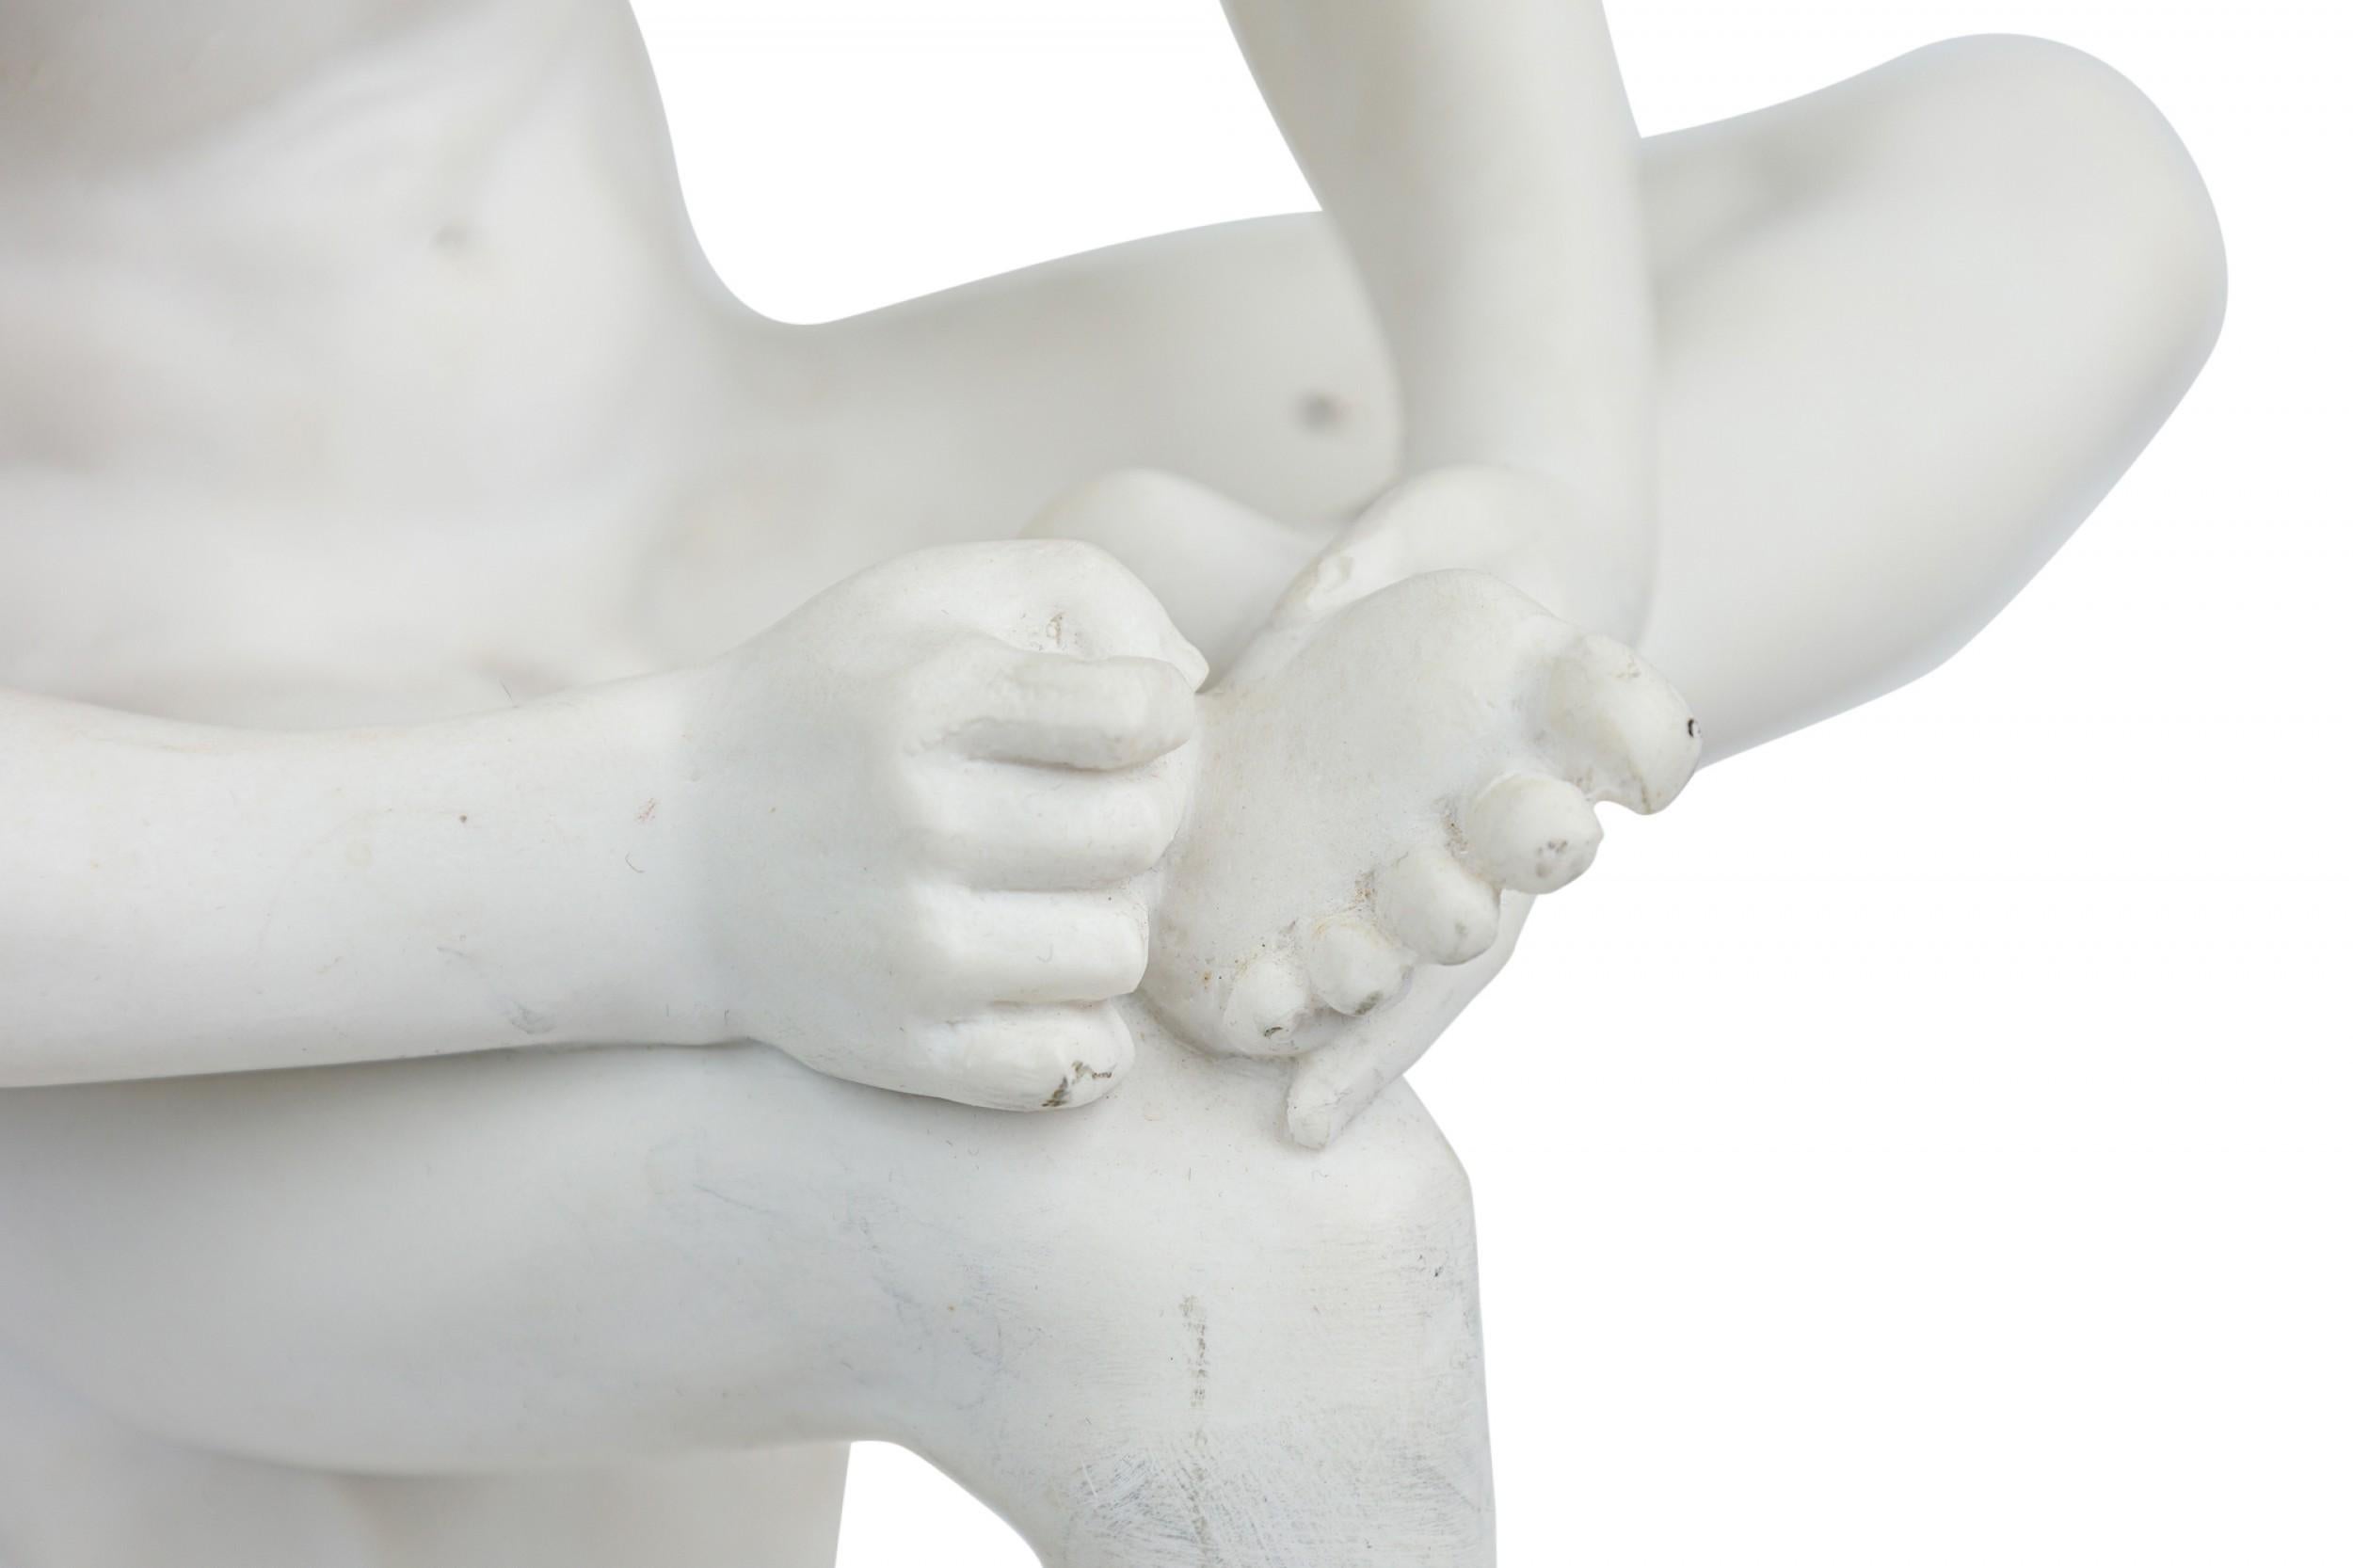 Italian White Porcelain Small Statue Cast of 